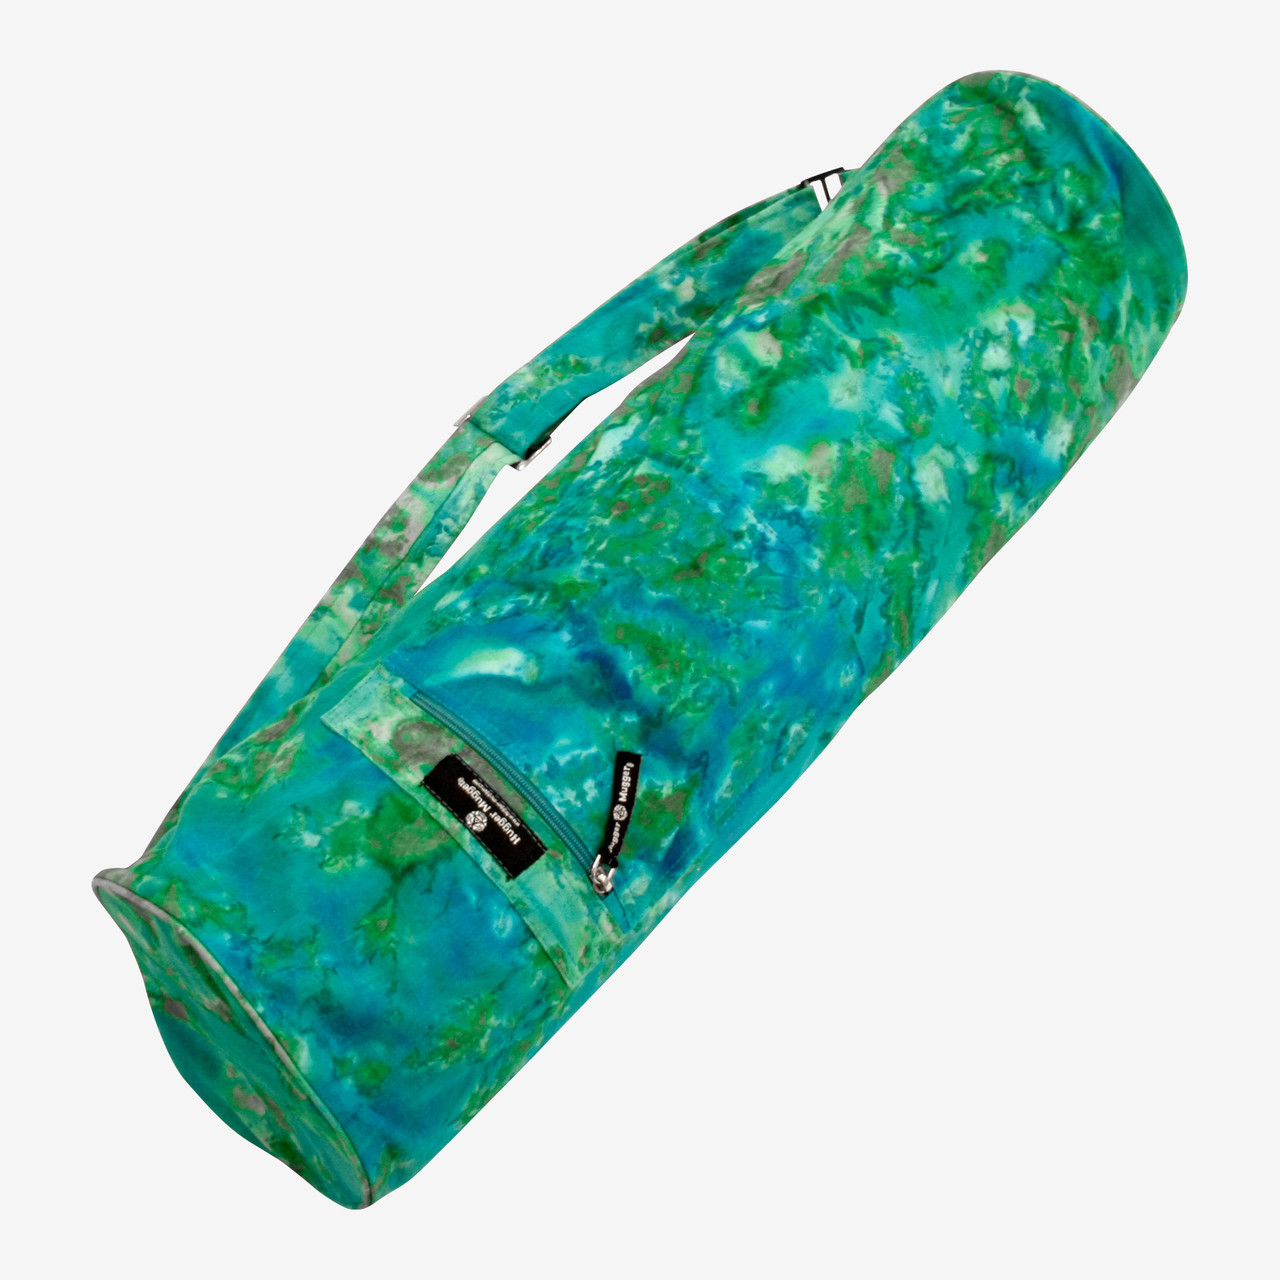 Extra Large Blue, Green, Teal, and Aqua Tropical Yoga Mat Bag